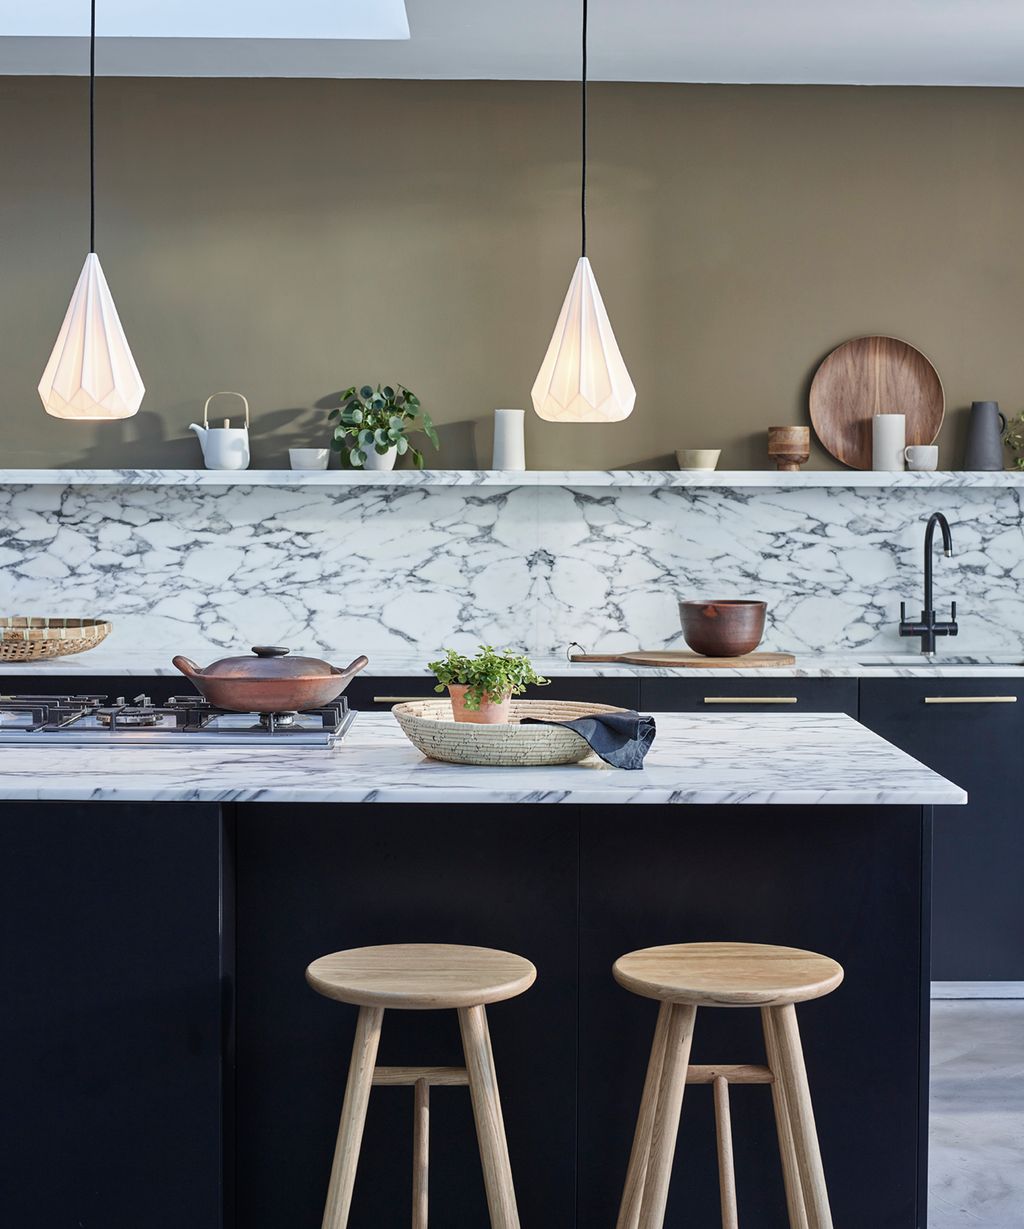 Kitchen diner ideas: 15 stylish combinations | Homebuilding